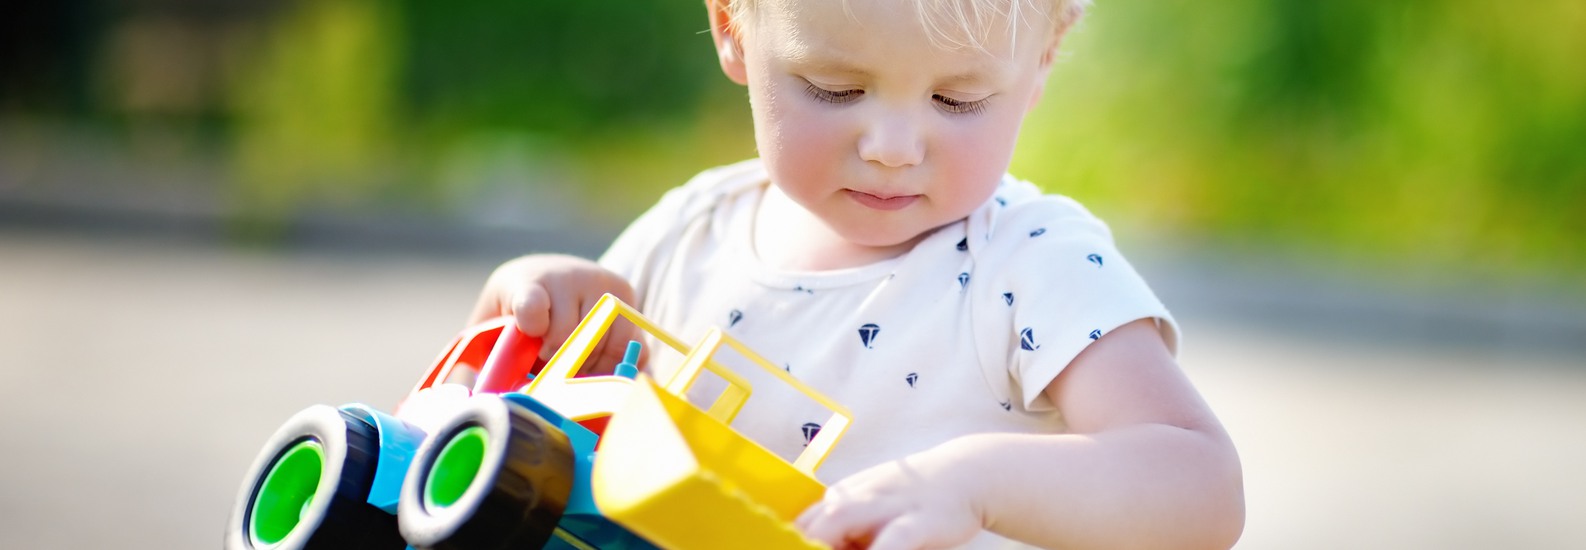 Ett litet barn som leker med en traktor av plast utomhus.